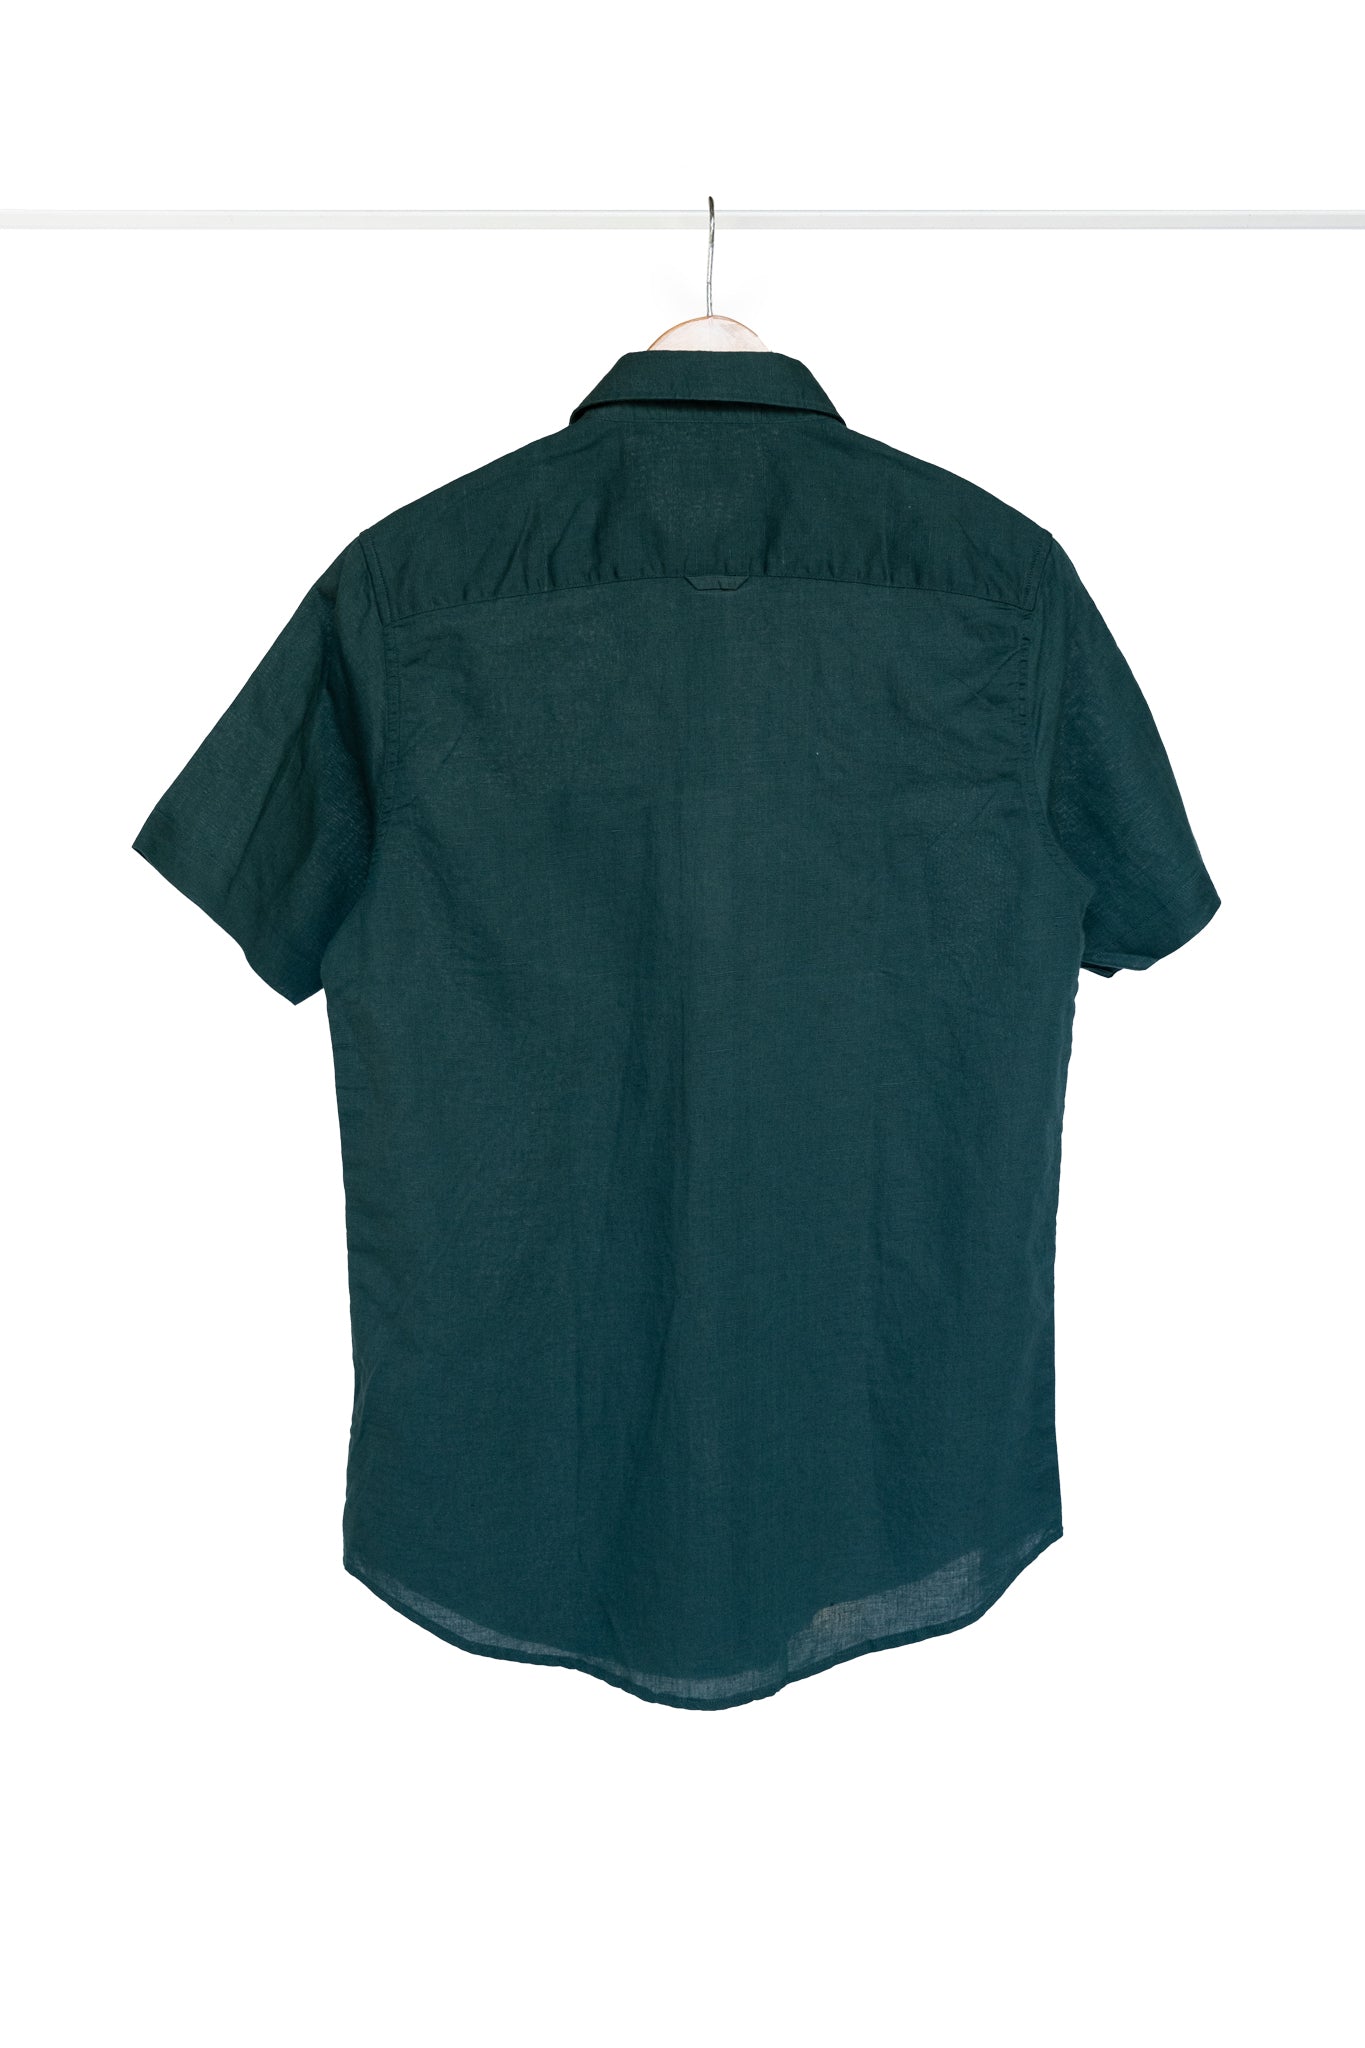 Bare Brown Cotton Linen Shirt, Slim Fit with Half Sleeves - Dark Green